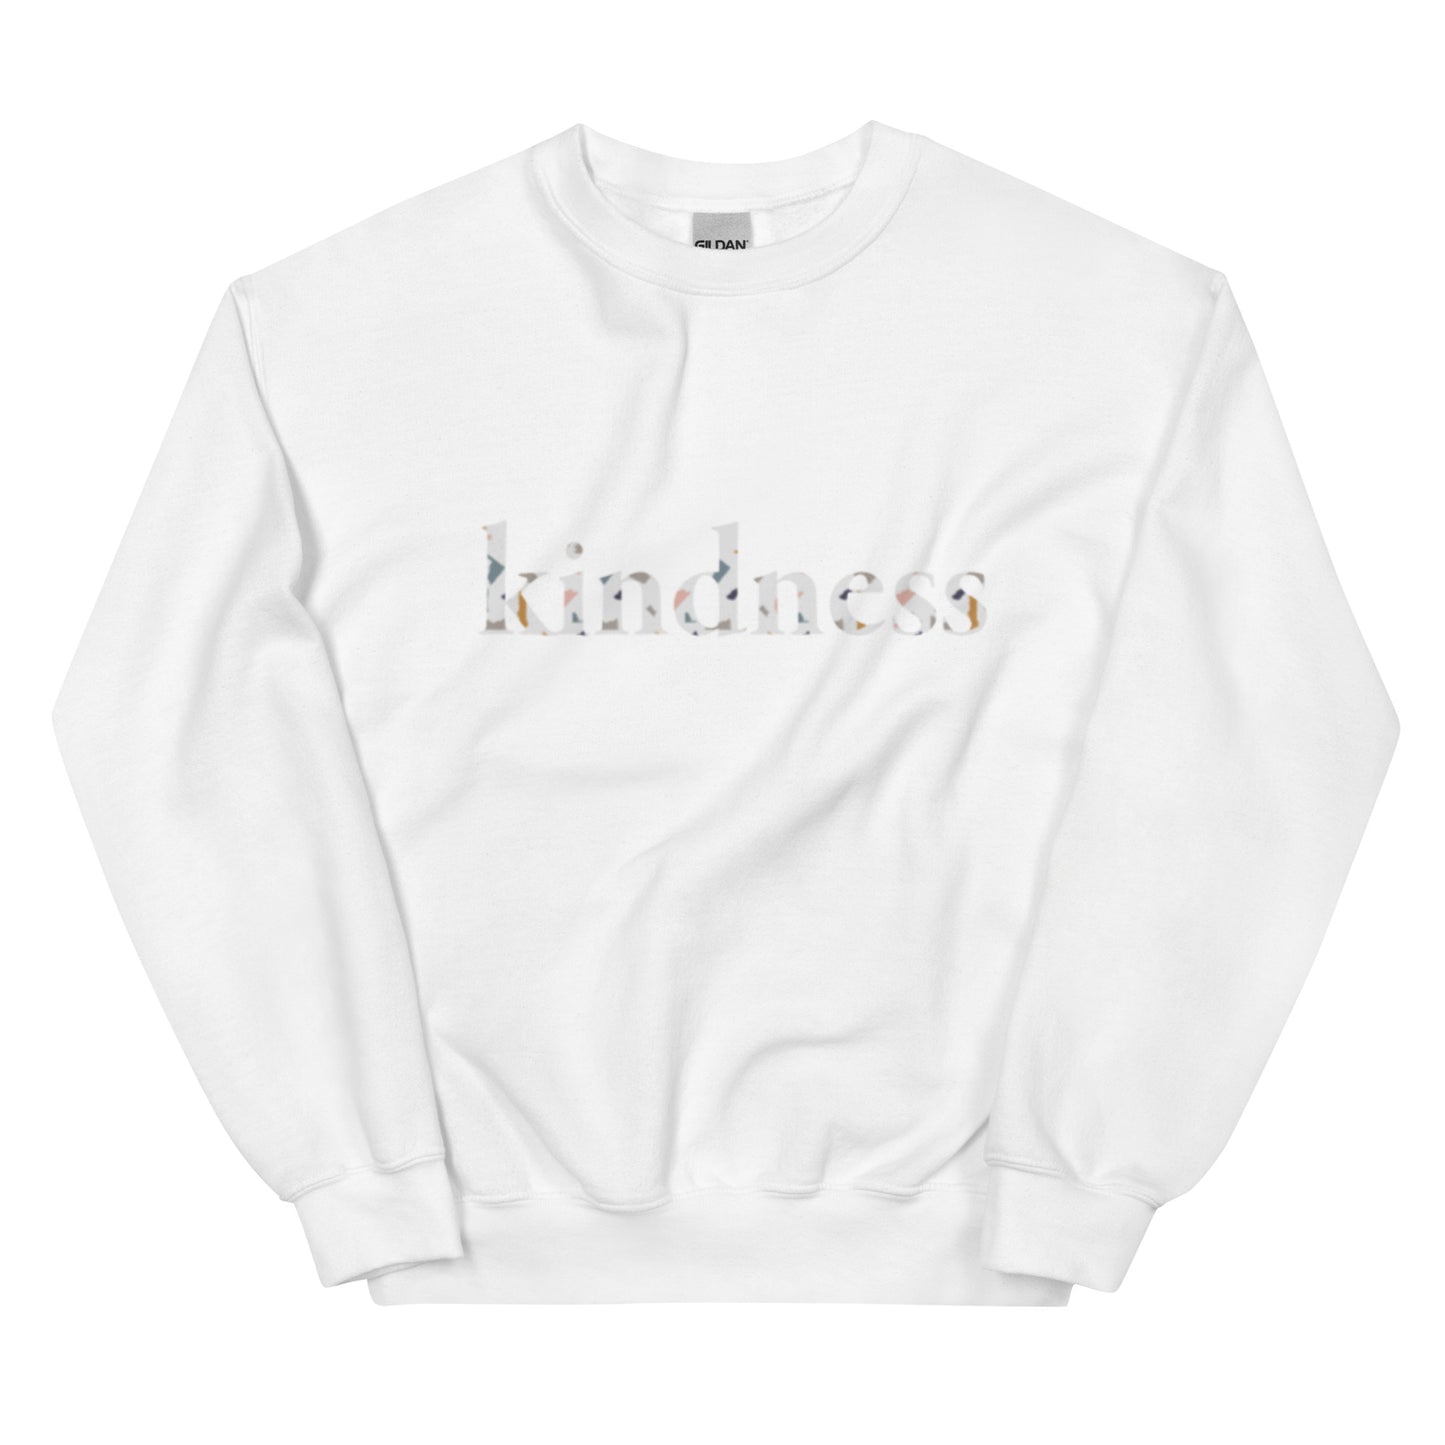 iheartu™️ x kindness anonymous Sweatshirt